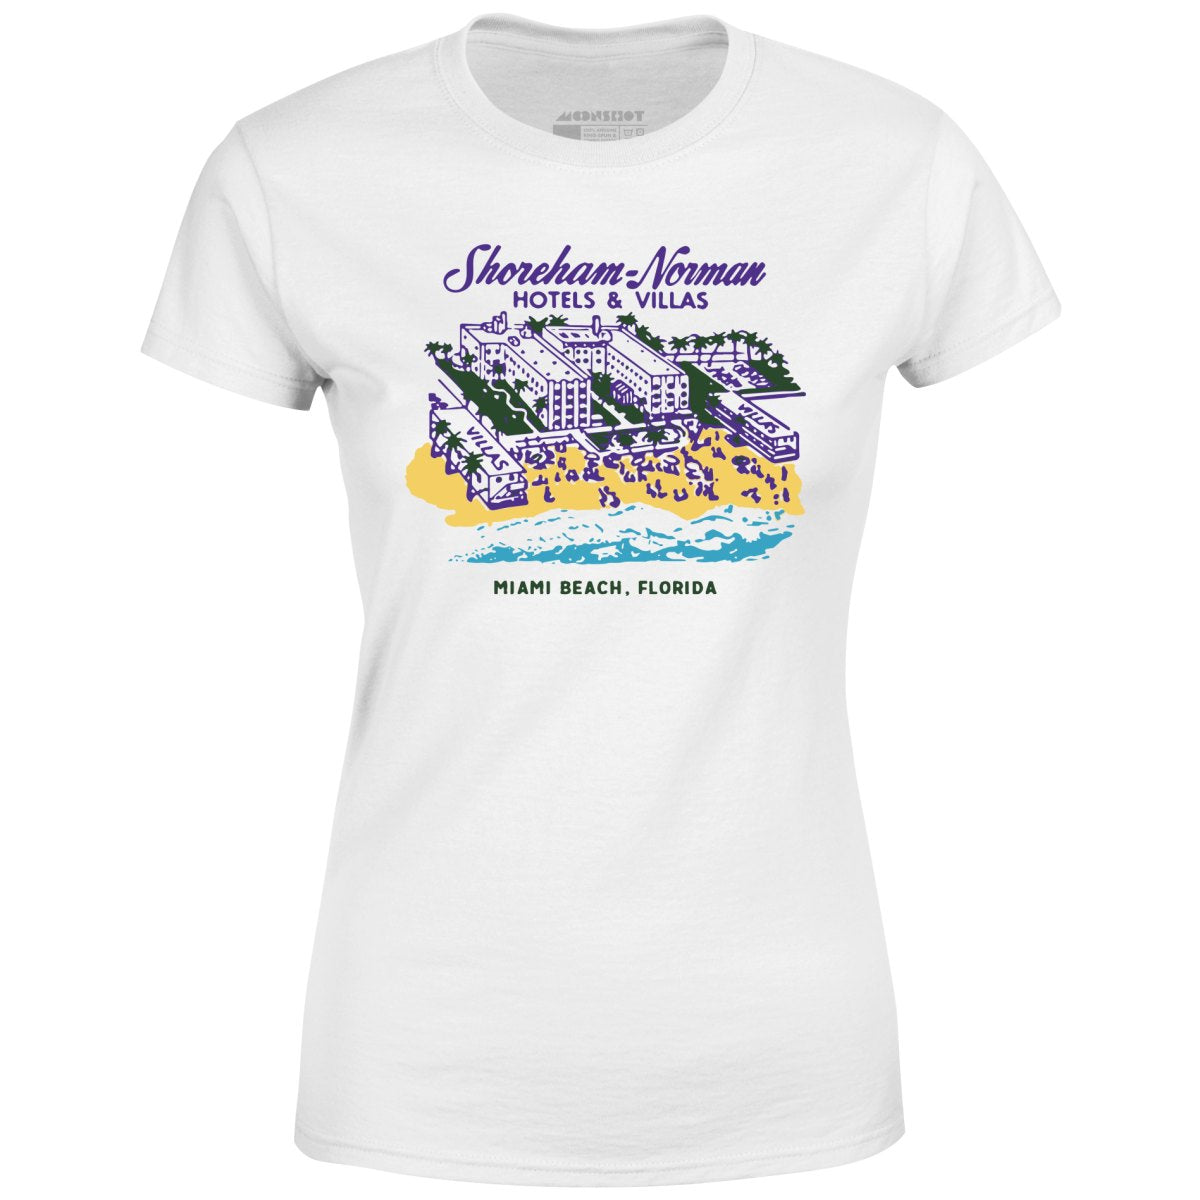 Shoreham Norman Hotels & Villas - Miami, FL - Vintage Hotel - Women's T-Shirt